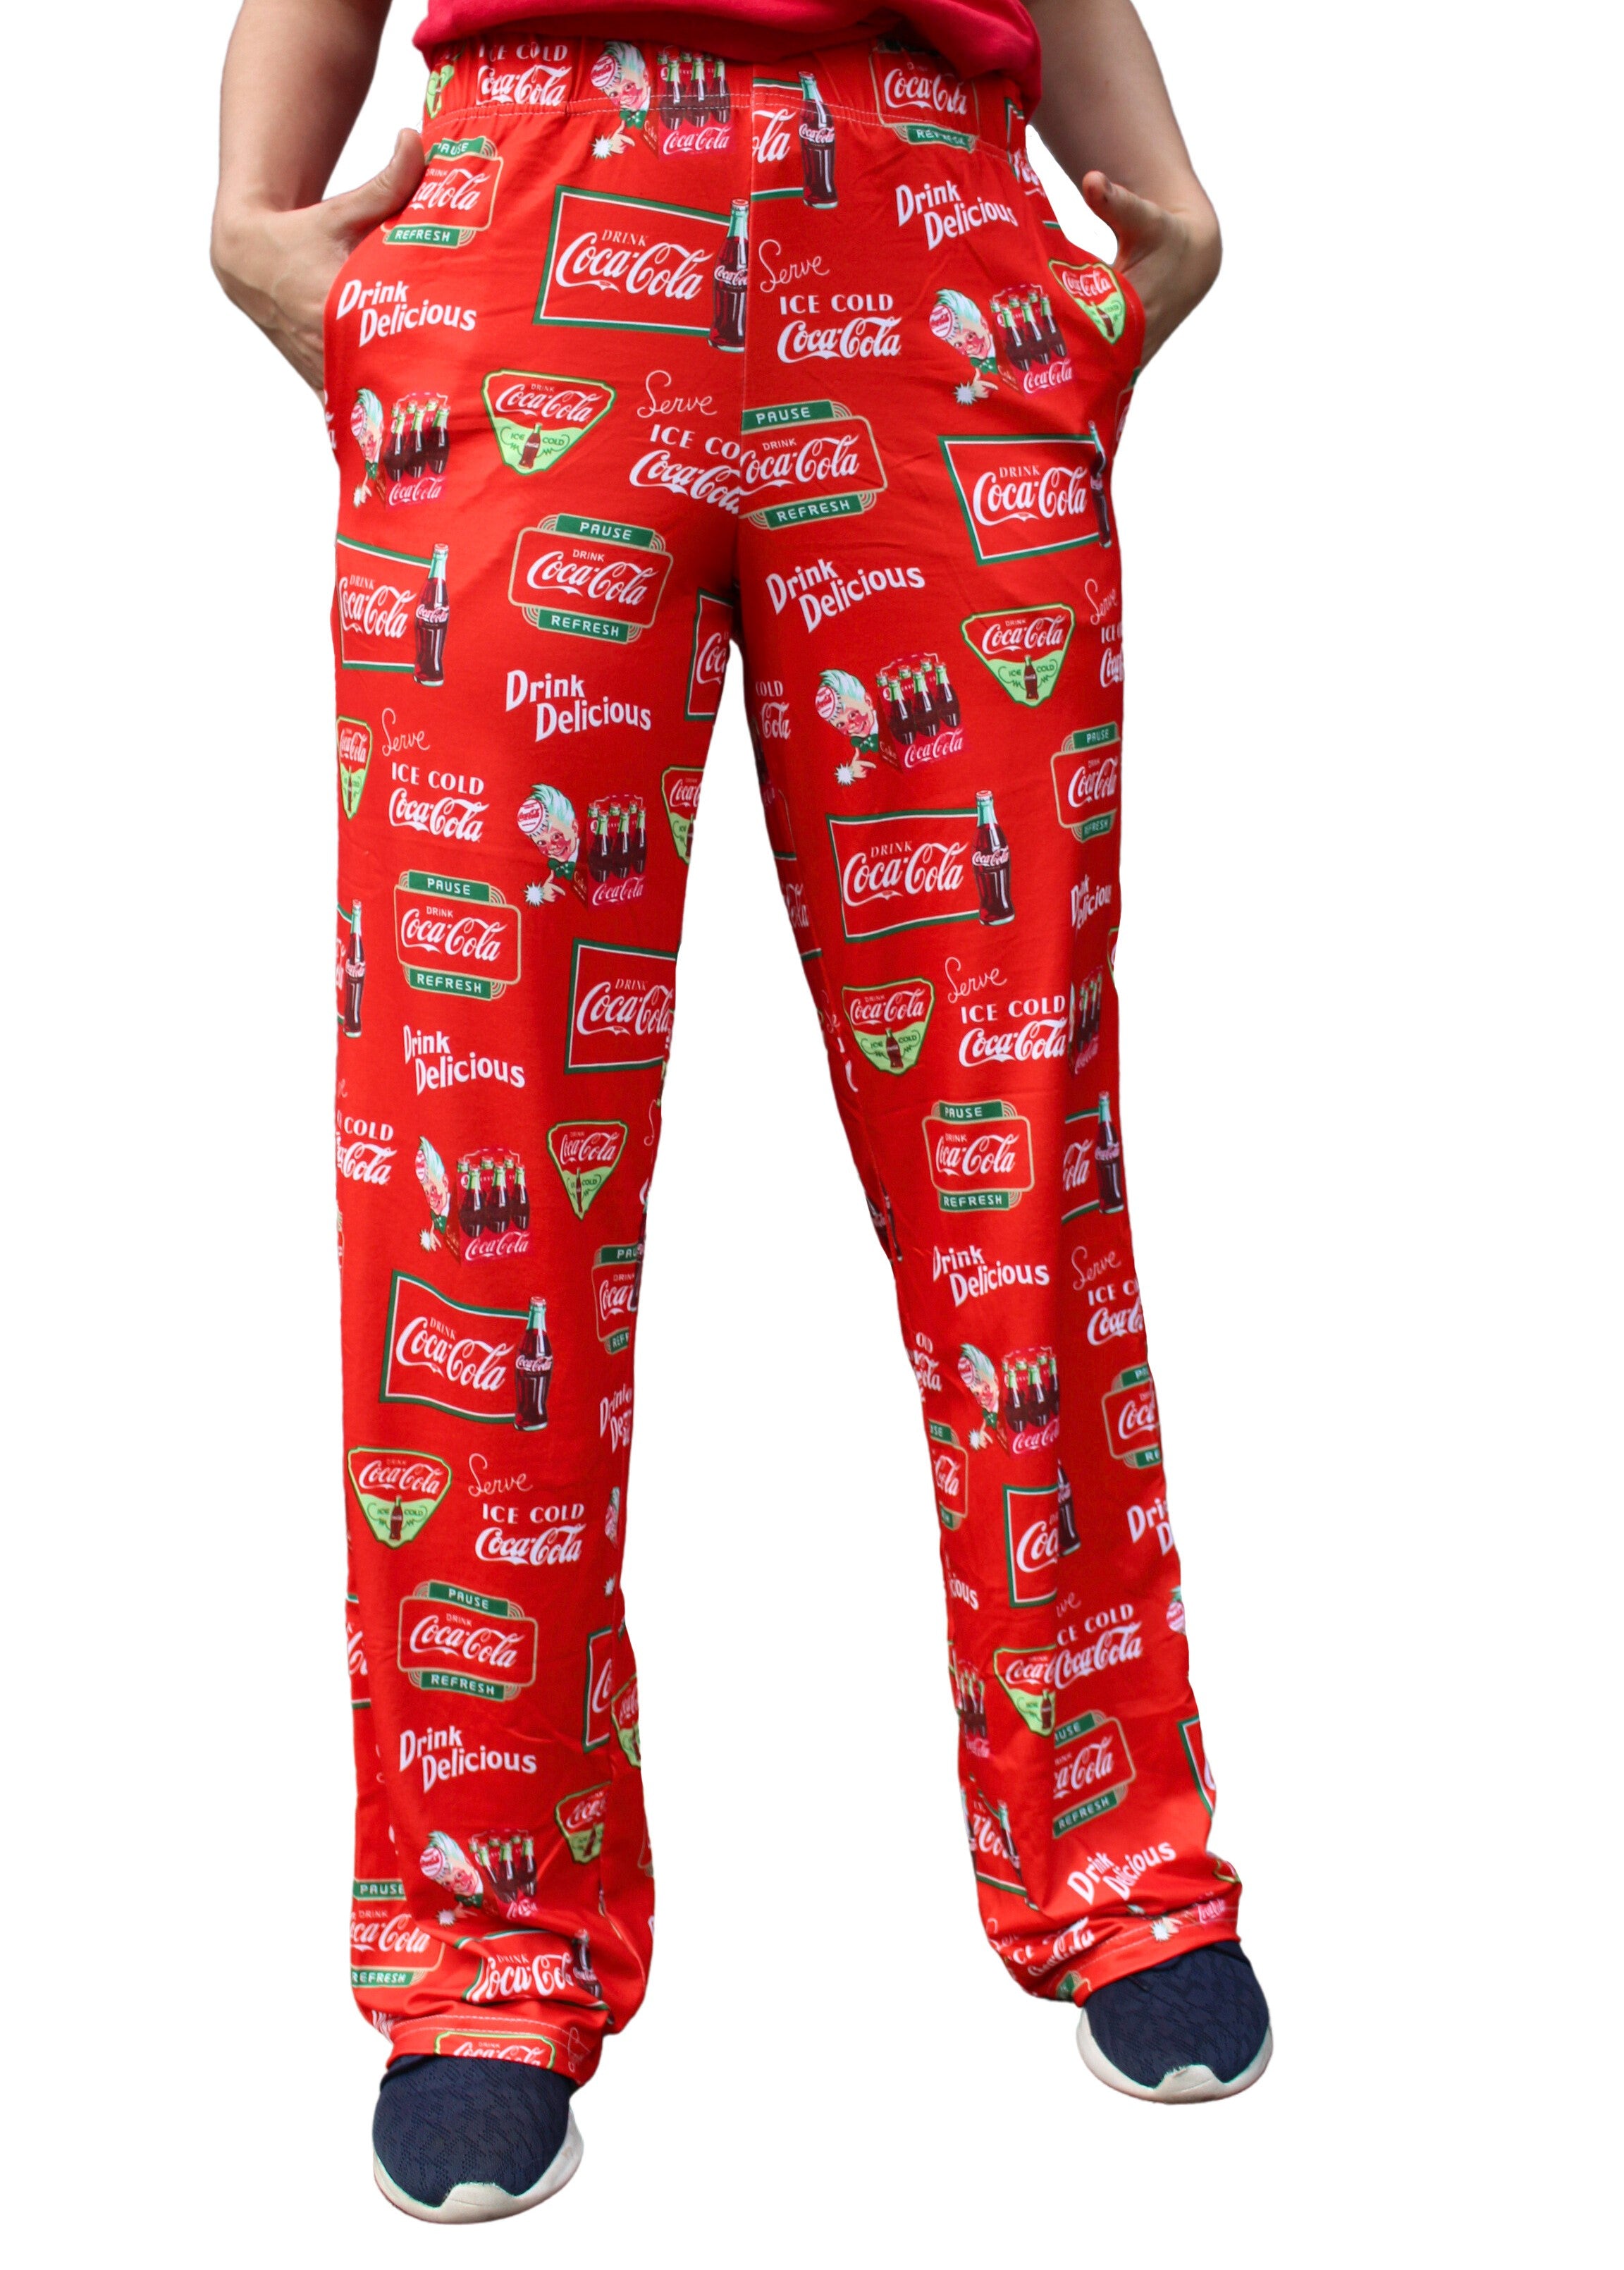 Coca-Cola Retro Pattern Pajama Lounge Pants on model front view waist down